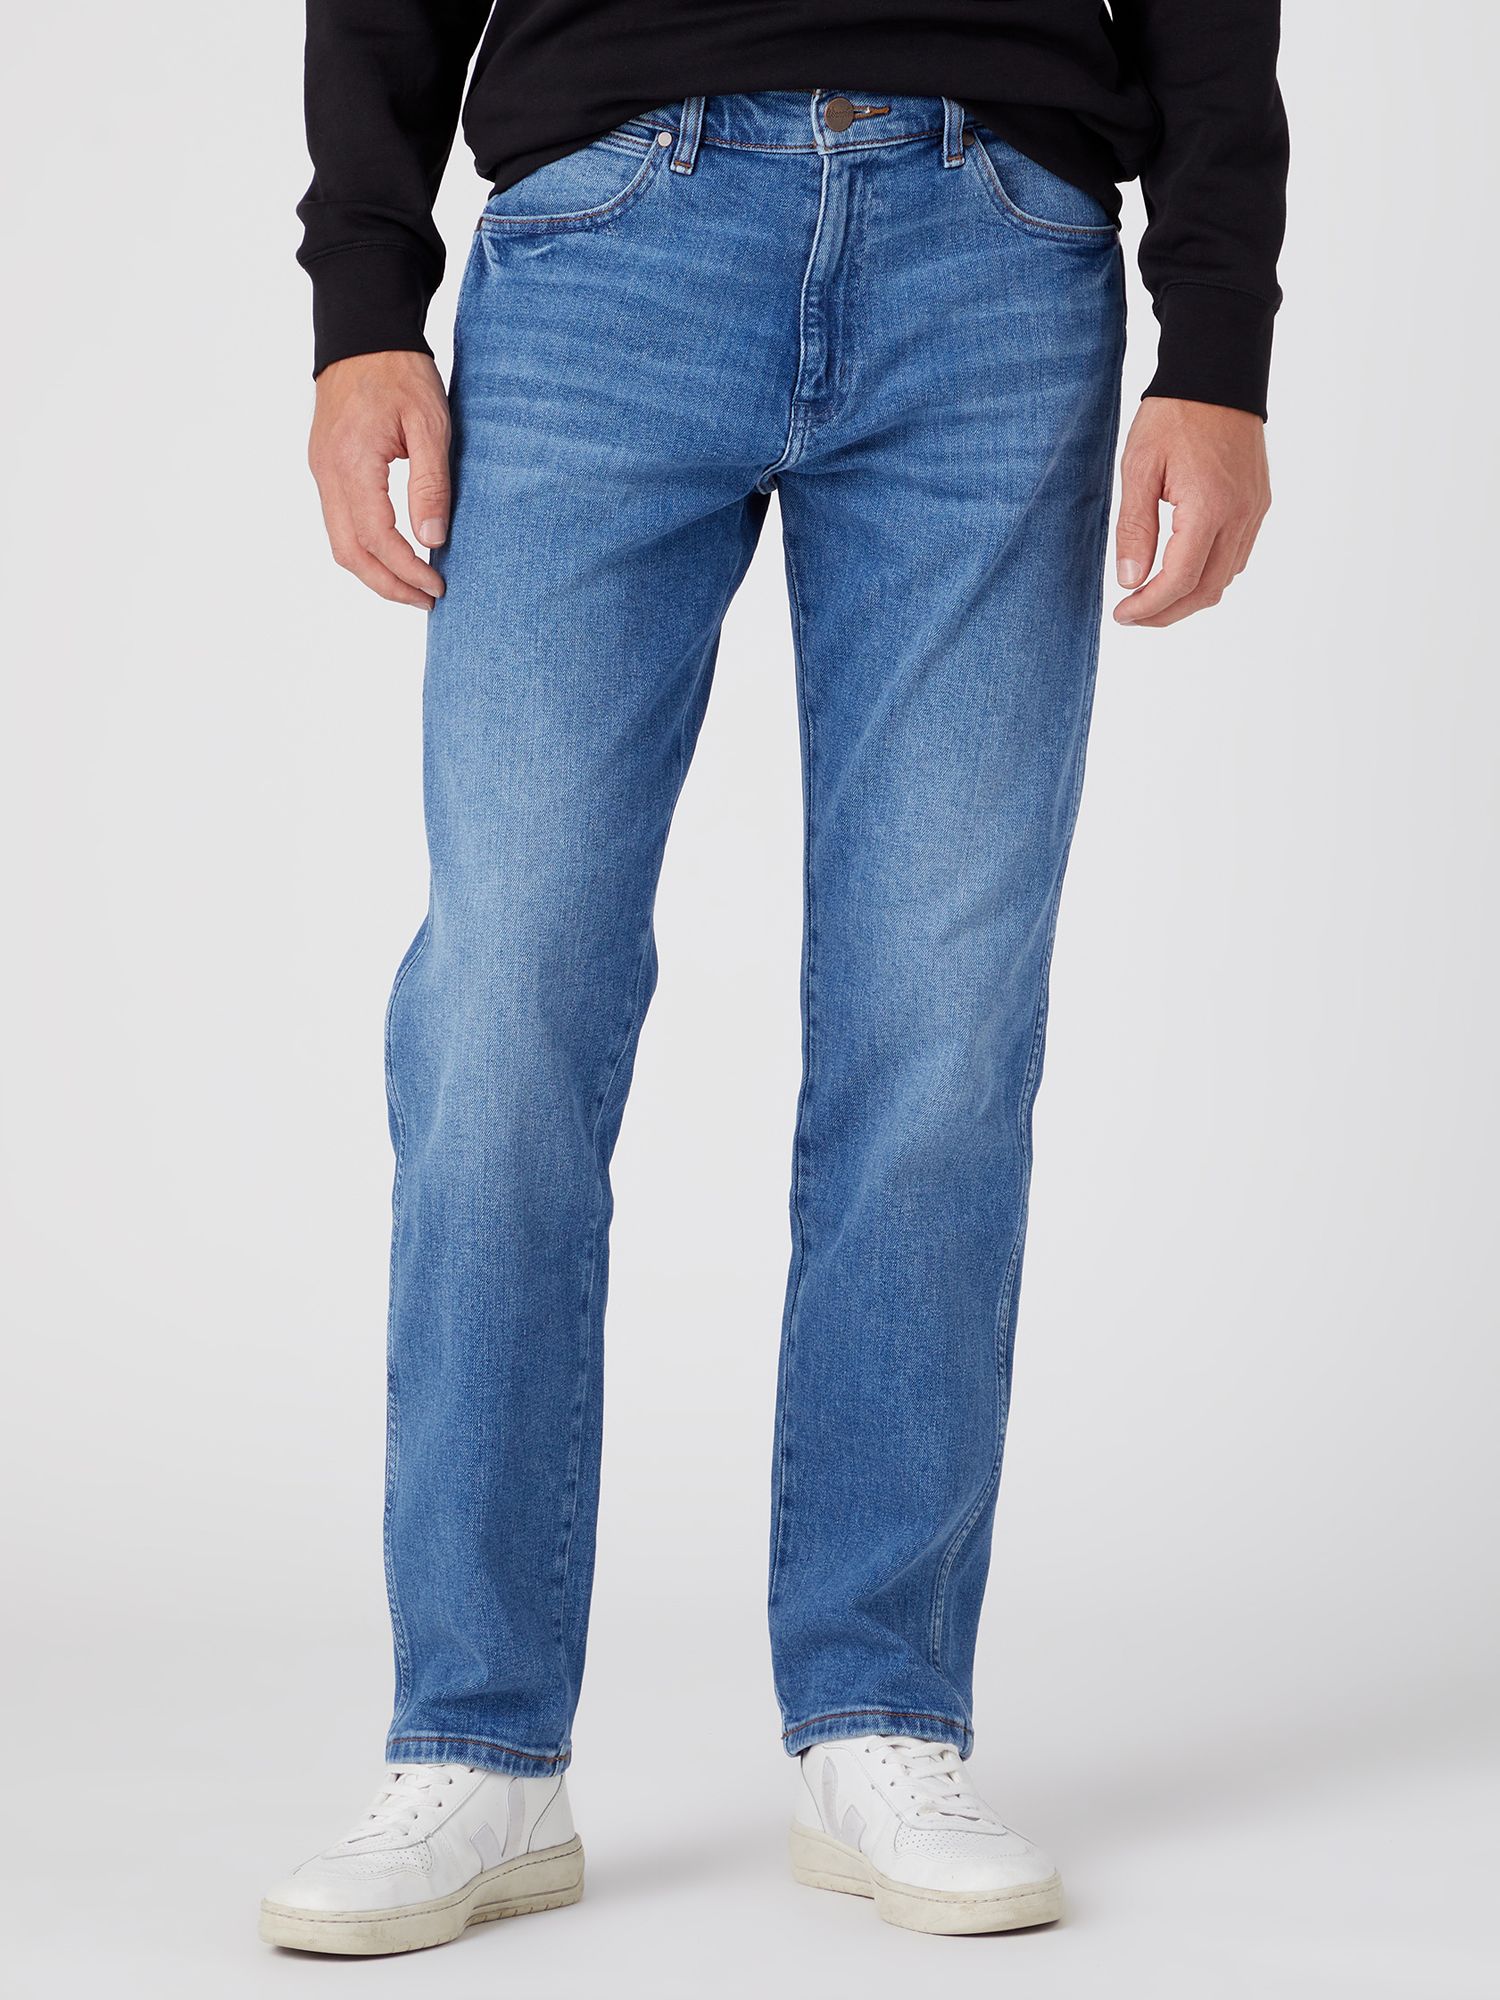 Wrangler Frontier Regular Fit Jeans, New Favorite at John Lewis & Partners